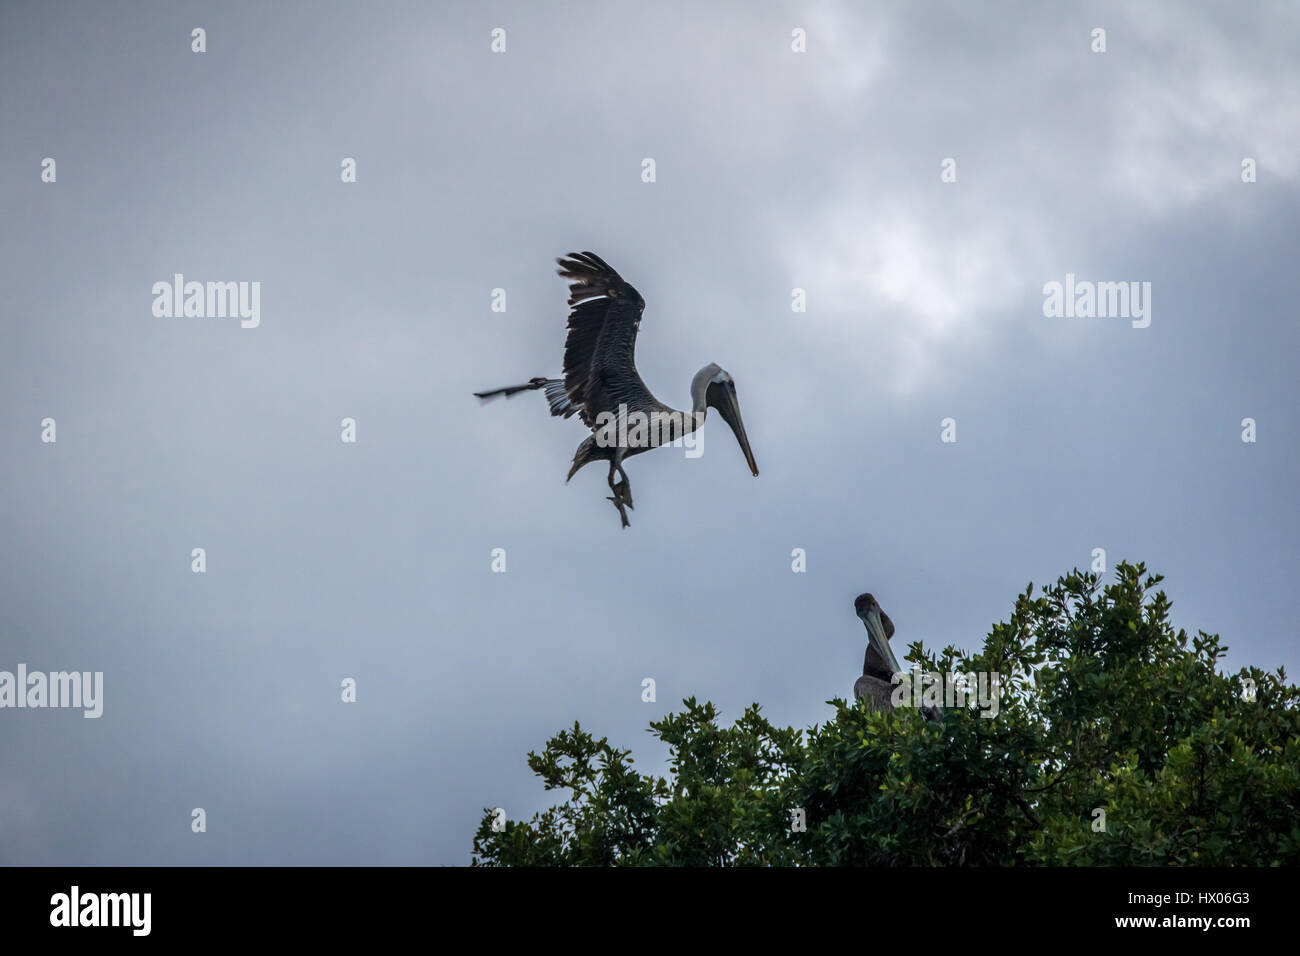 Brown pelican flying over a tree - Panama City, Panama Stock Photo